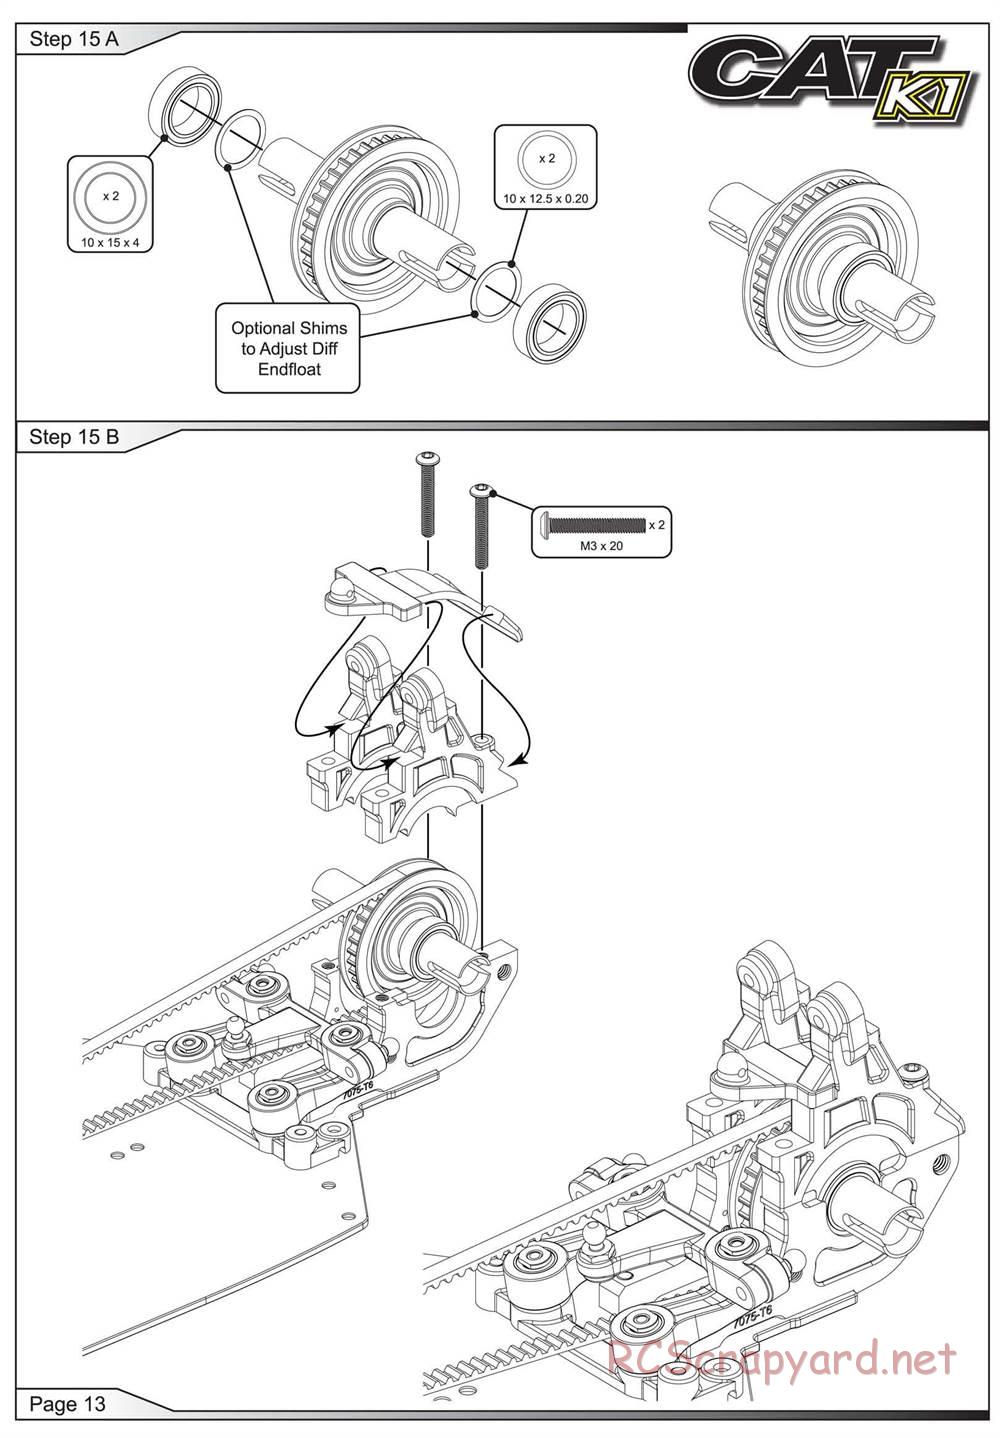 Schumacher - Cat K1 - Manual - Page 13